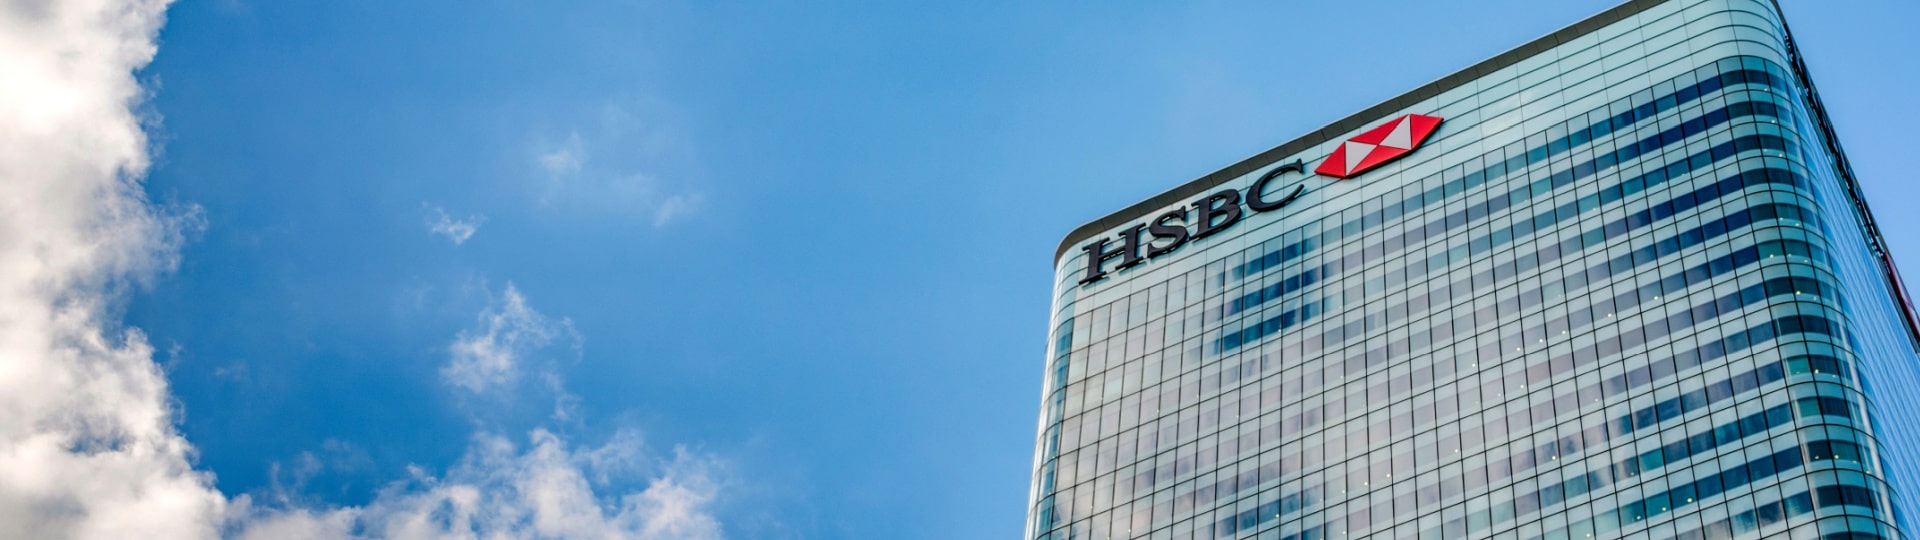 HSBC ztrojnásobila zisk na 12,9 miliardy dolarů